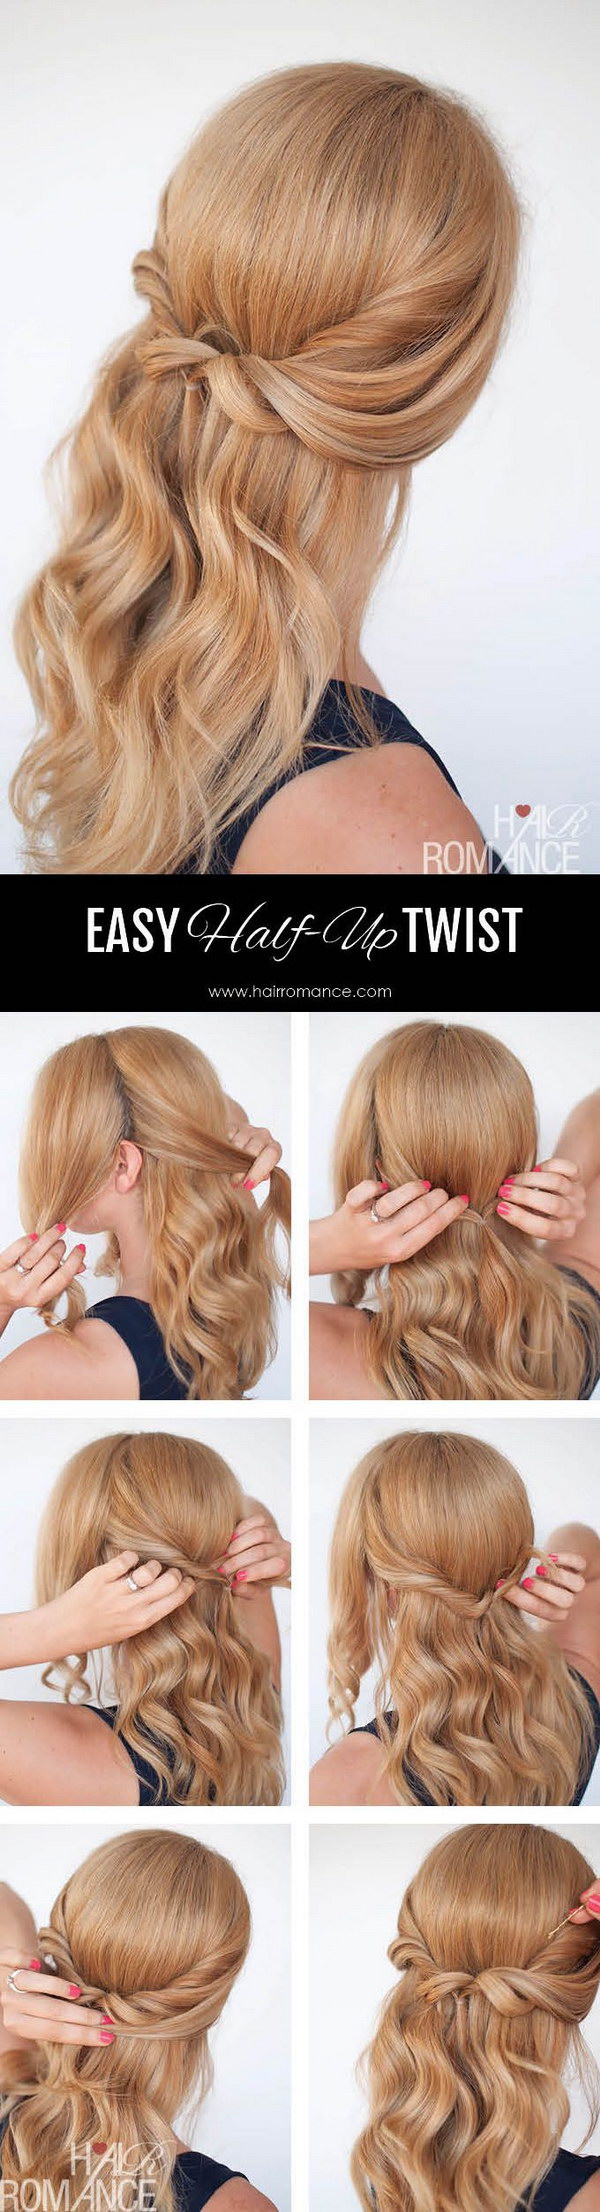 Easy Half Up Twist Hairstyle Tutorial. 